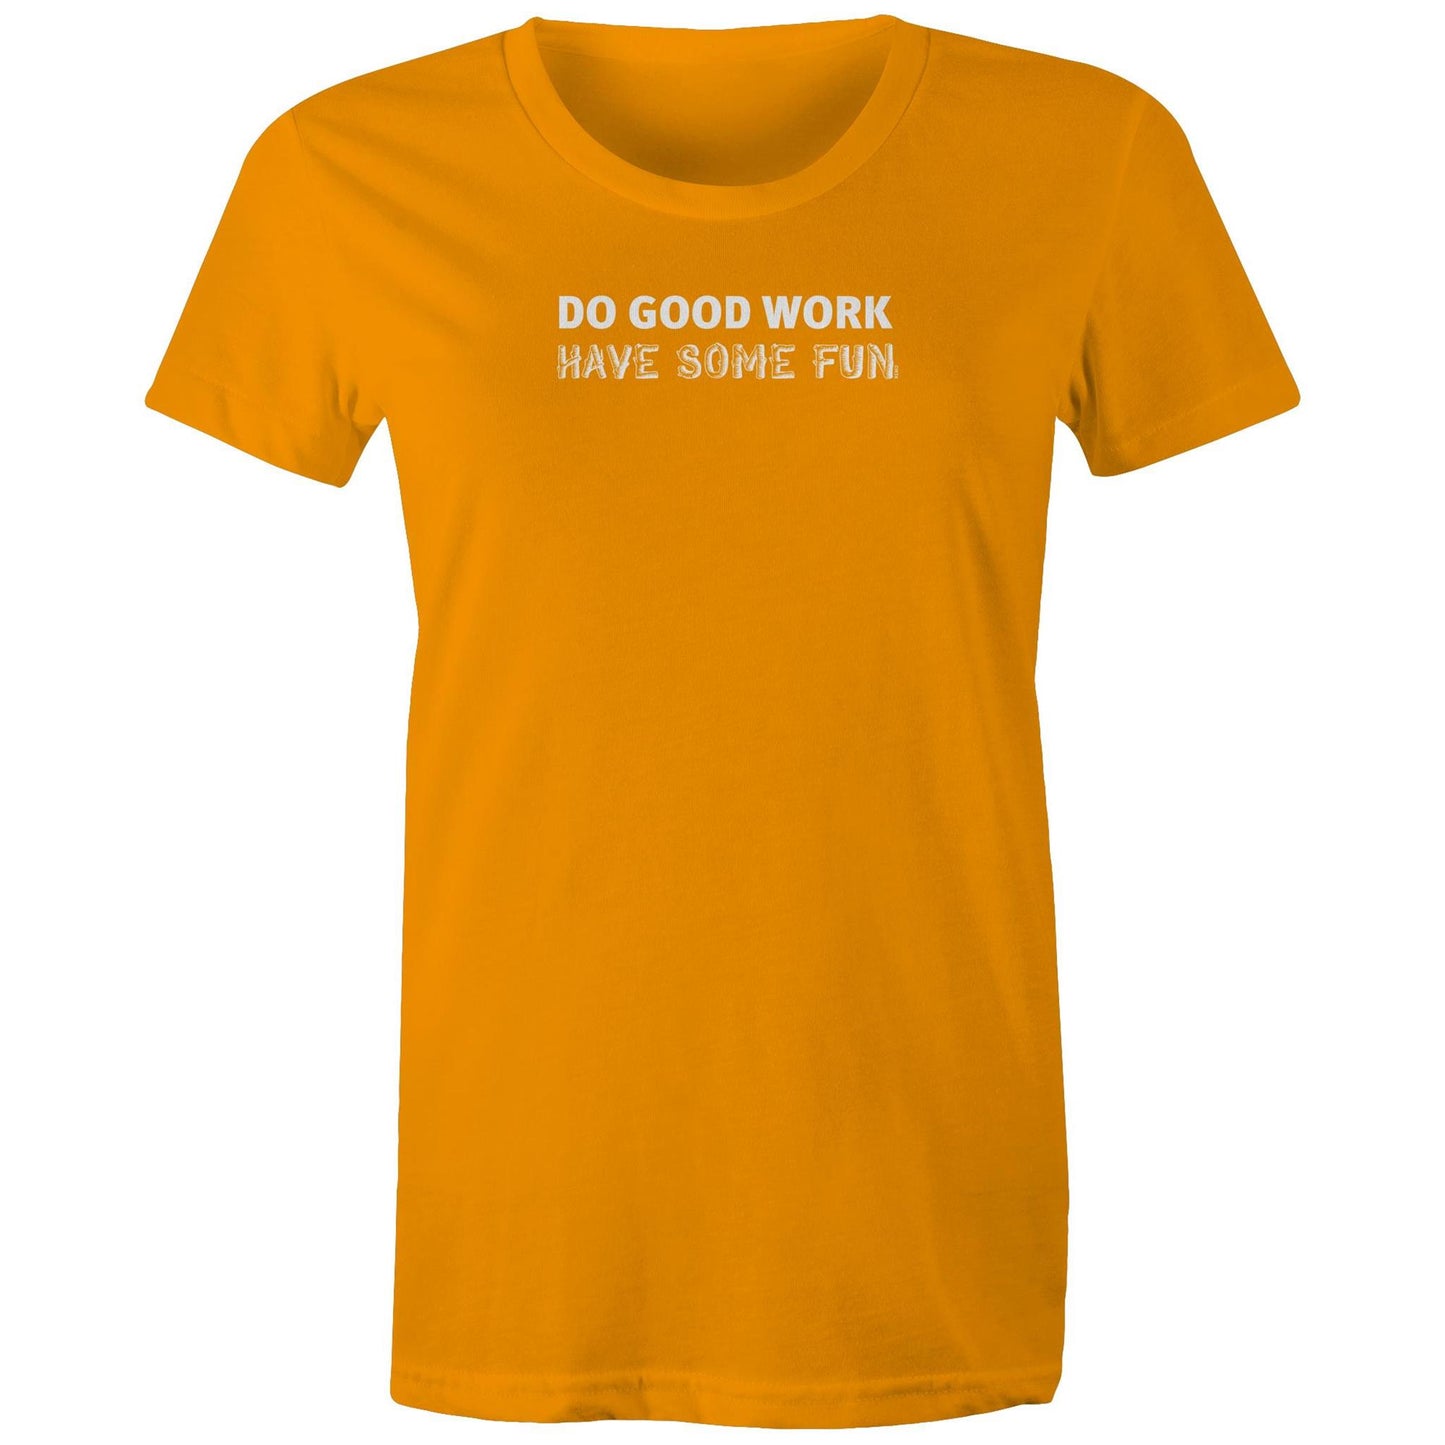 Do Good Work T Shirts for Women